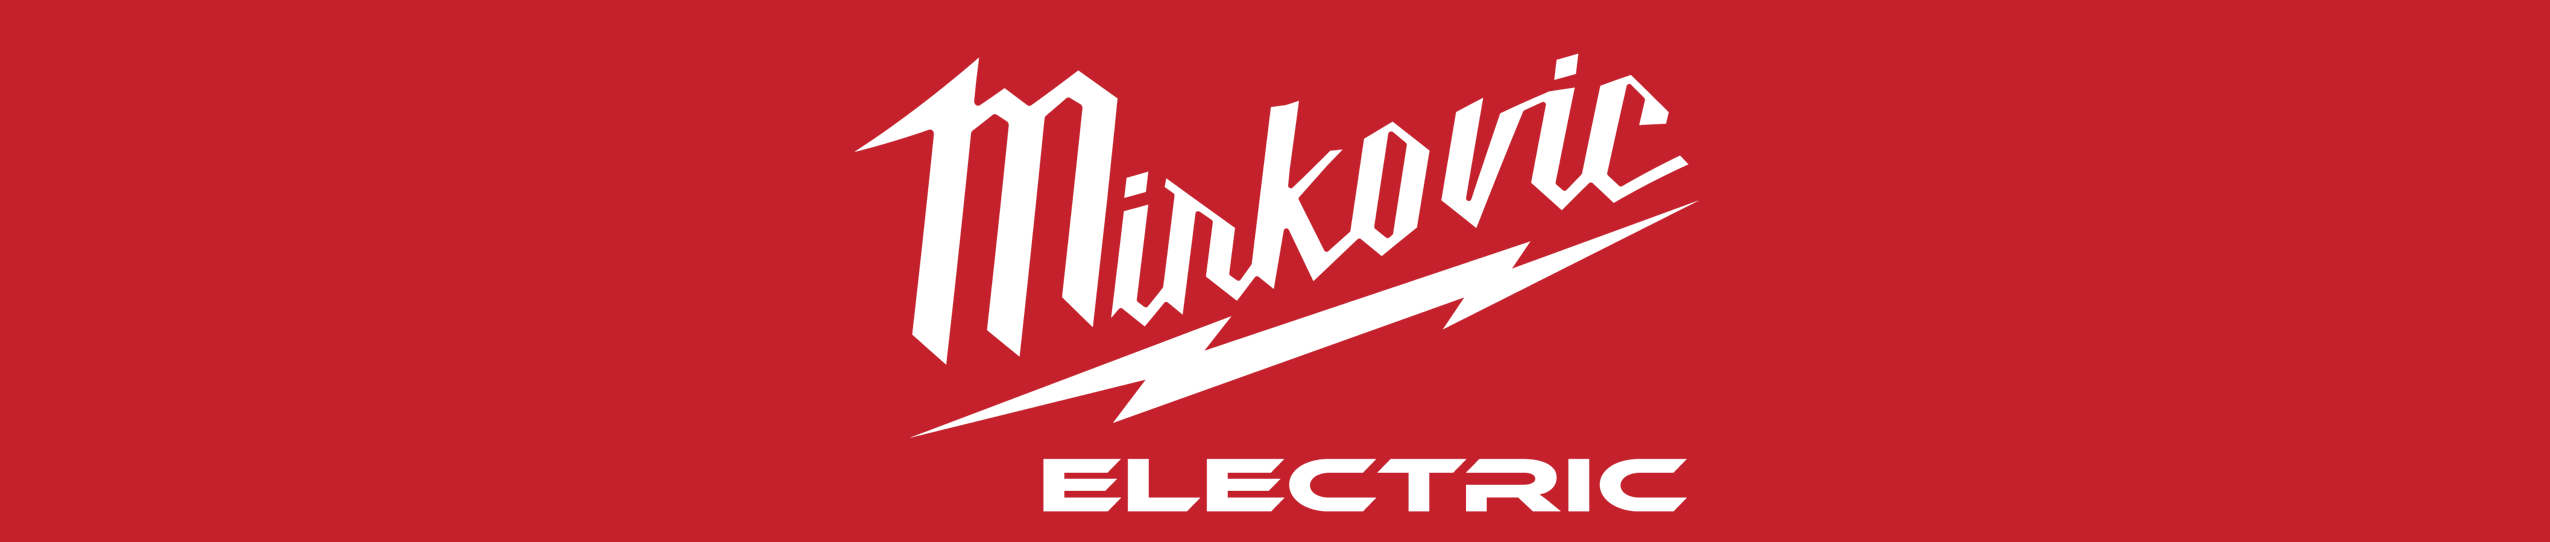 Mirkovic Electric